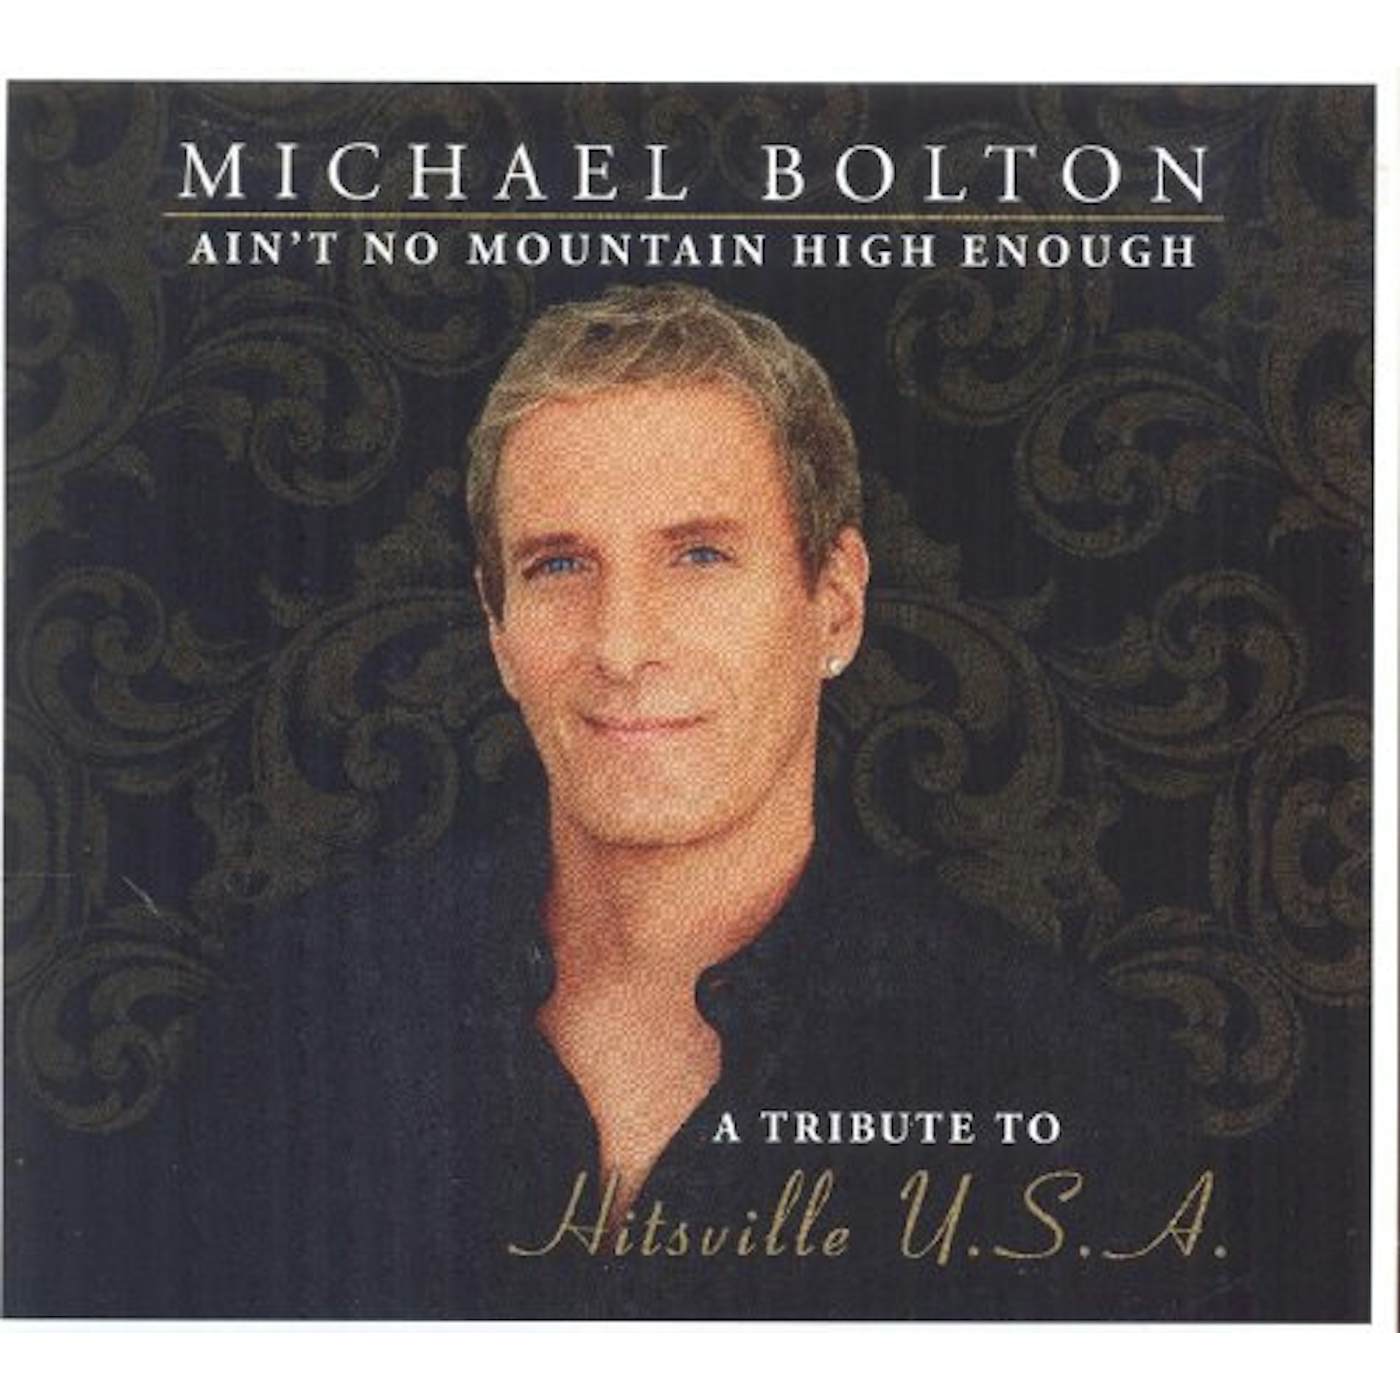 Michael Bolton AIN'T NO MOUNTAIN HIGH CD